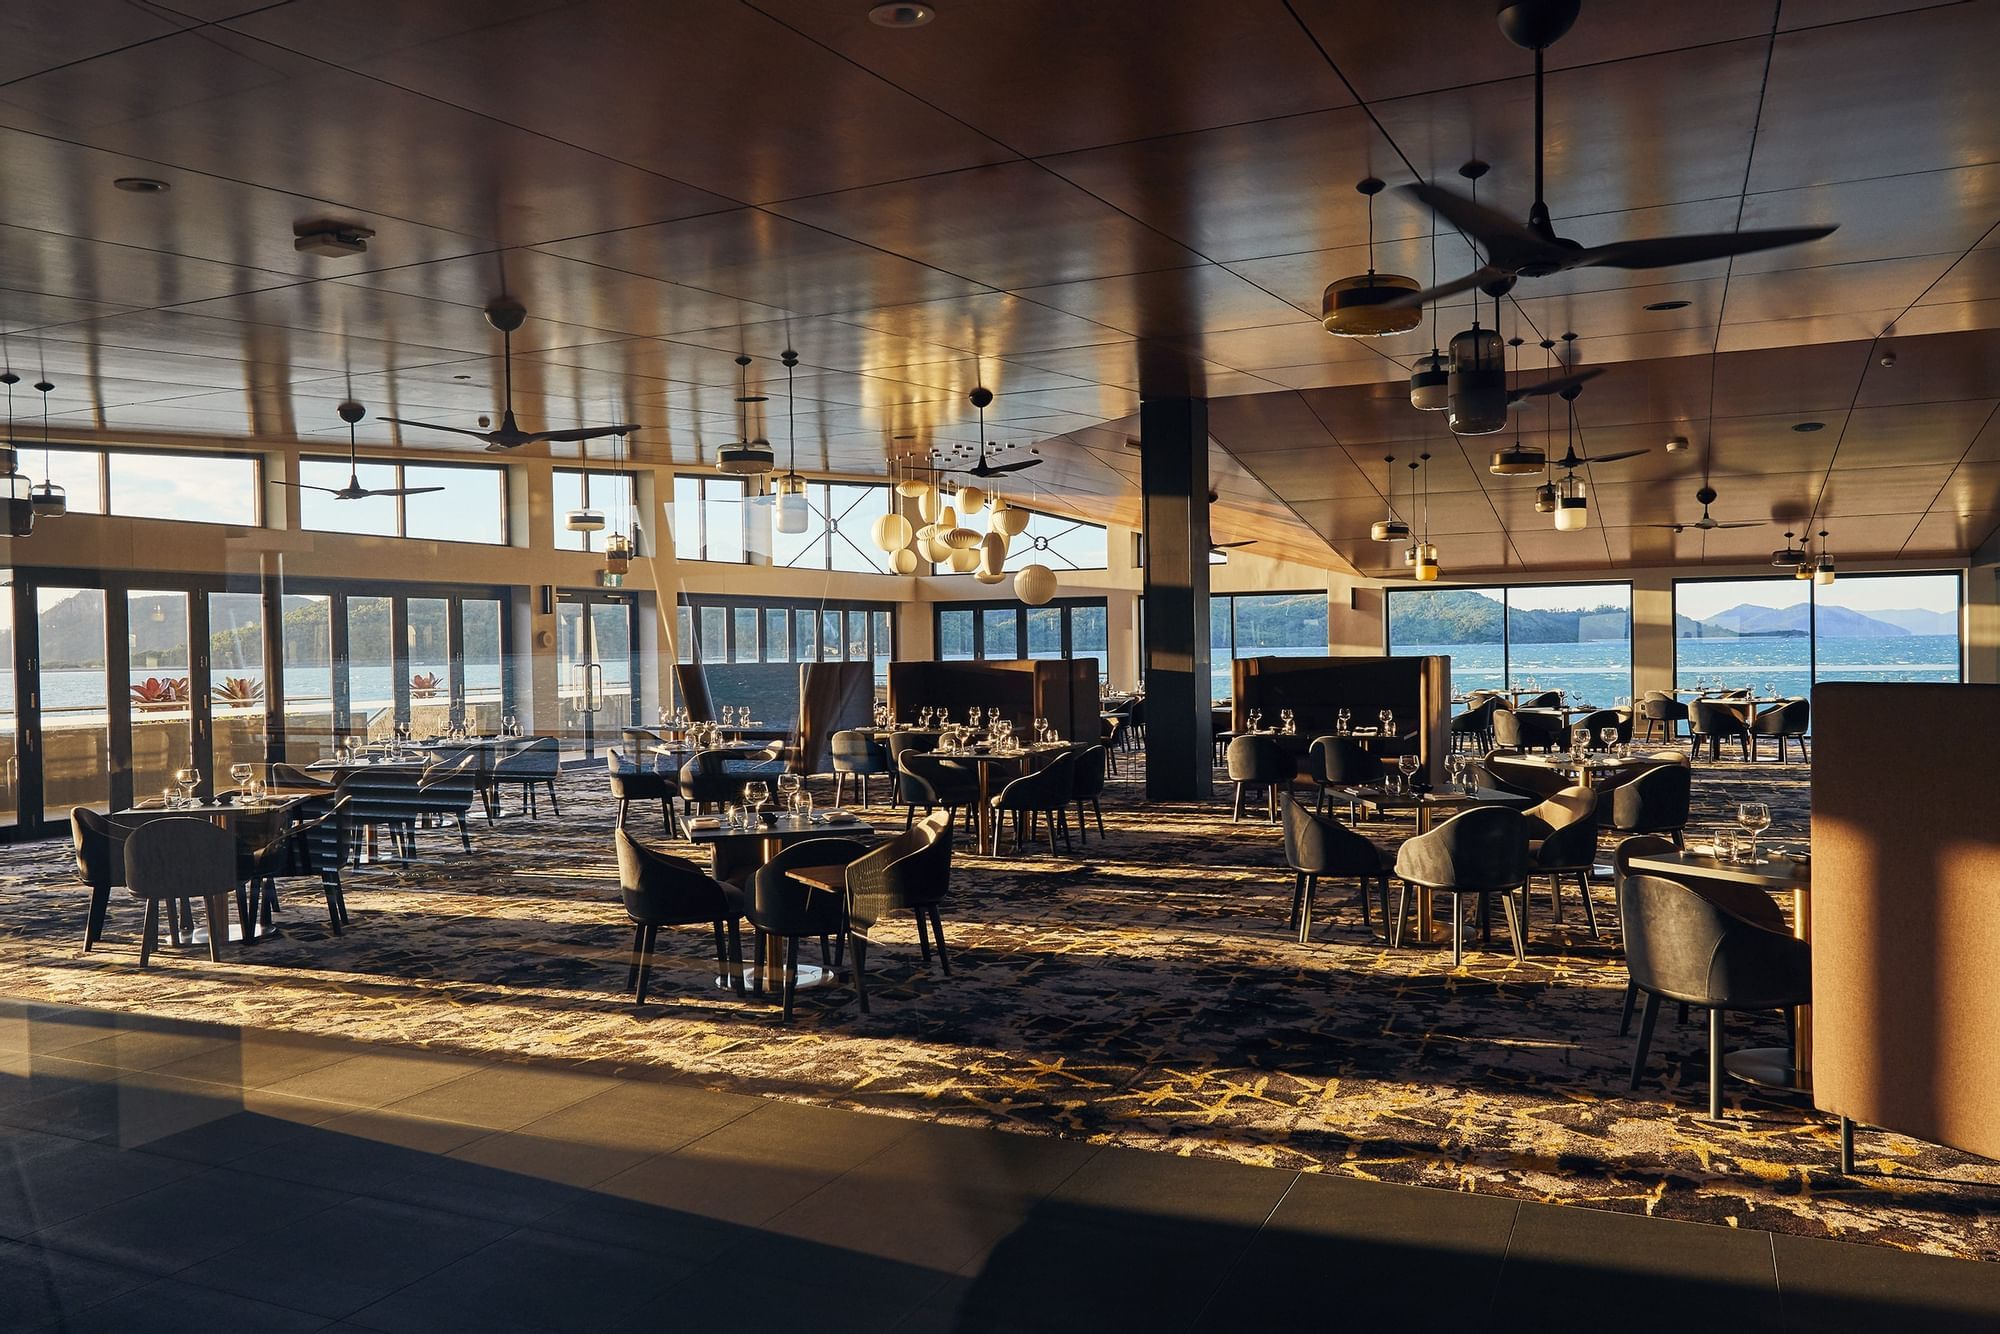 Infinity Restaurant dining area at Daydream Island Resort